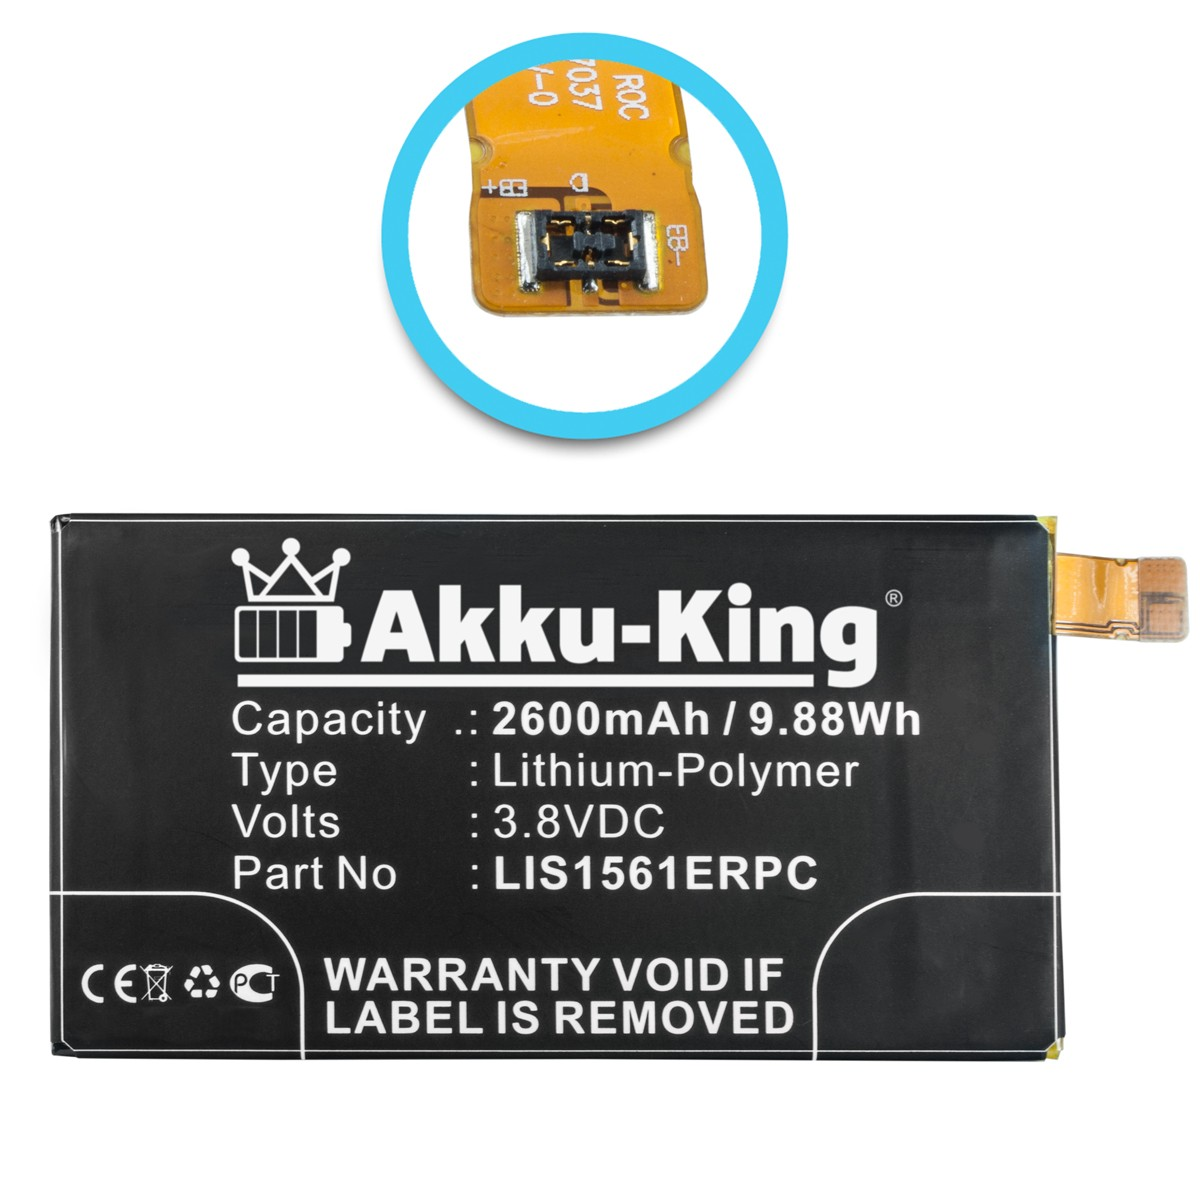 3.8 2600mAh Sony Handy-Akku, LIS1561ERPC Li-Polymer mit Volt, Akku kompatibel AKKU-KING